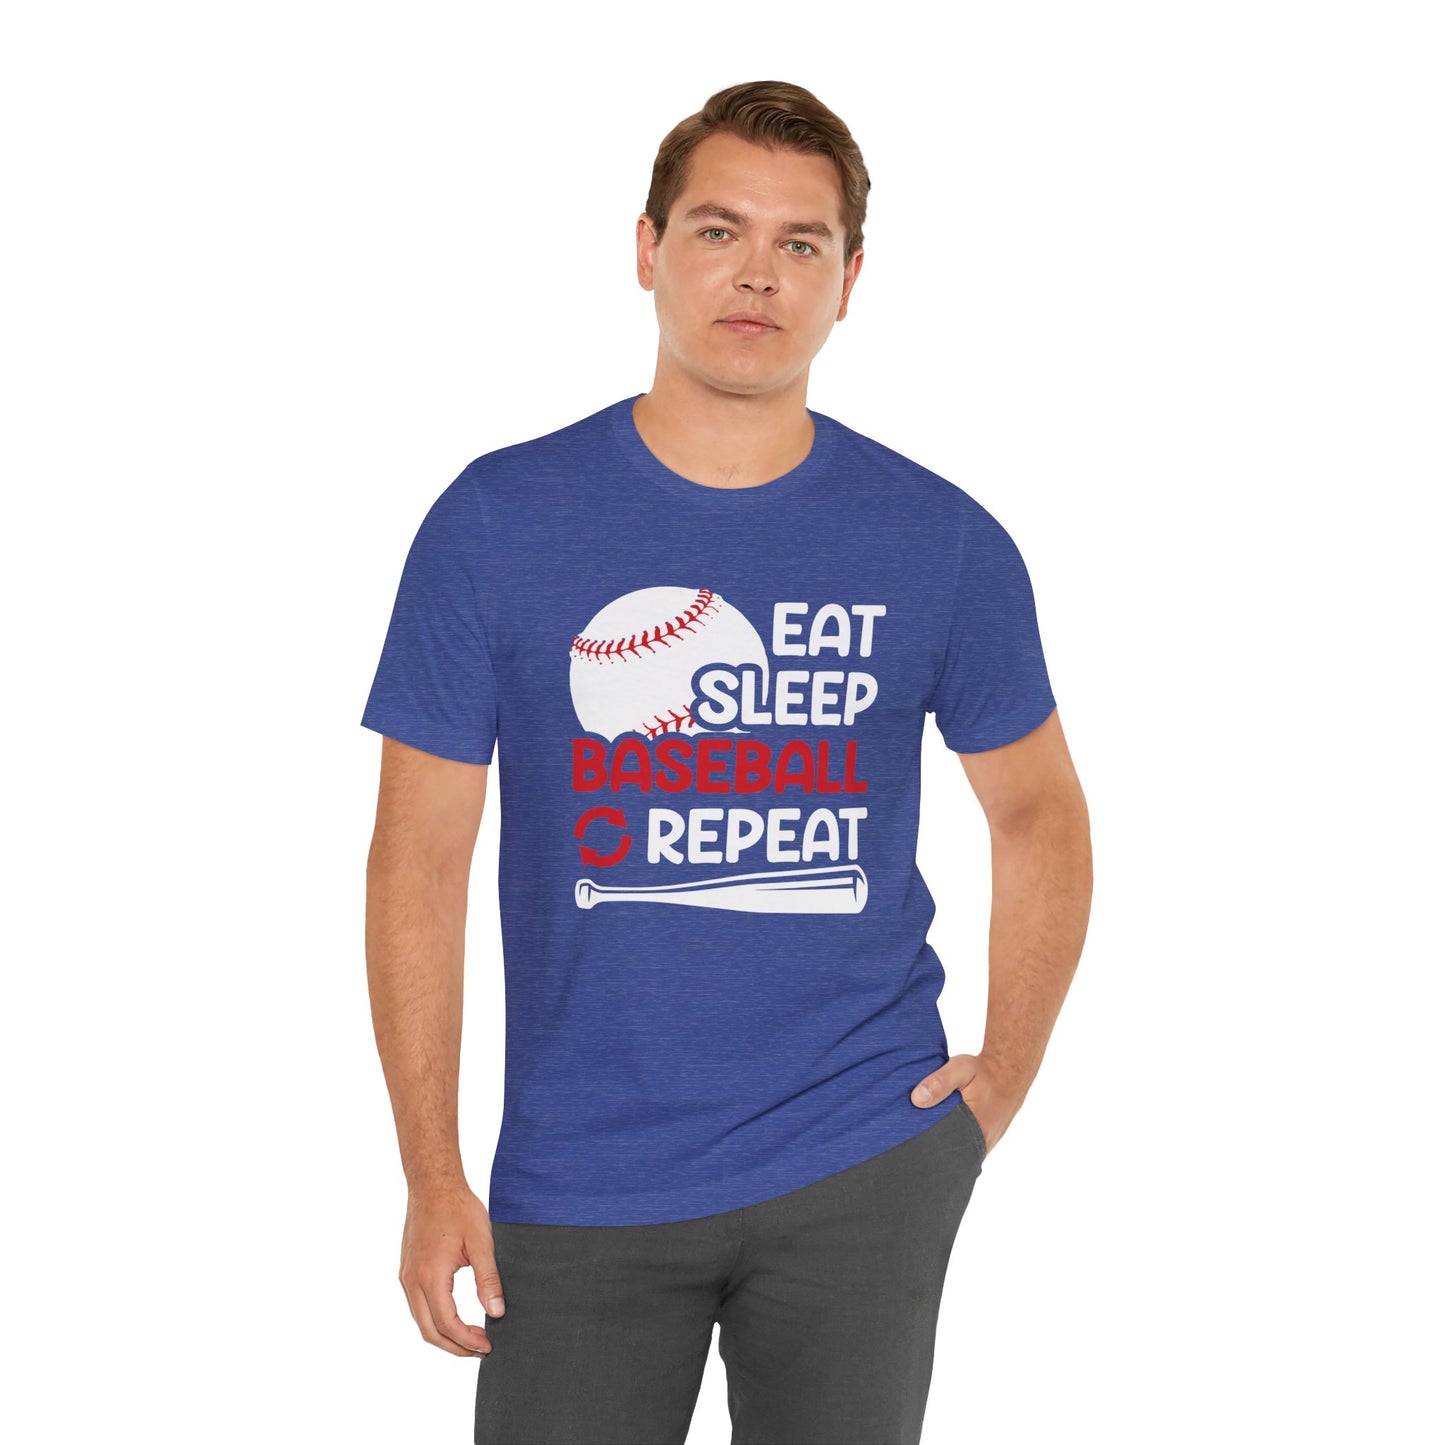 Eat Sleep Baseball Repeat Adult Unisex Baseball Short Sleeve Shirt